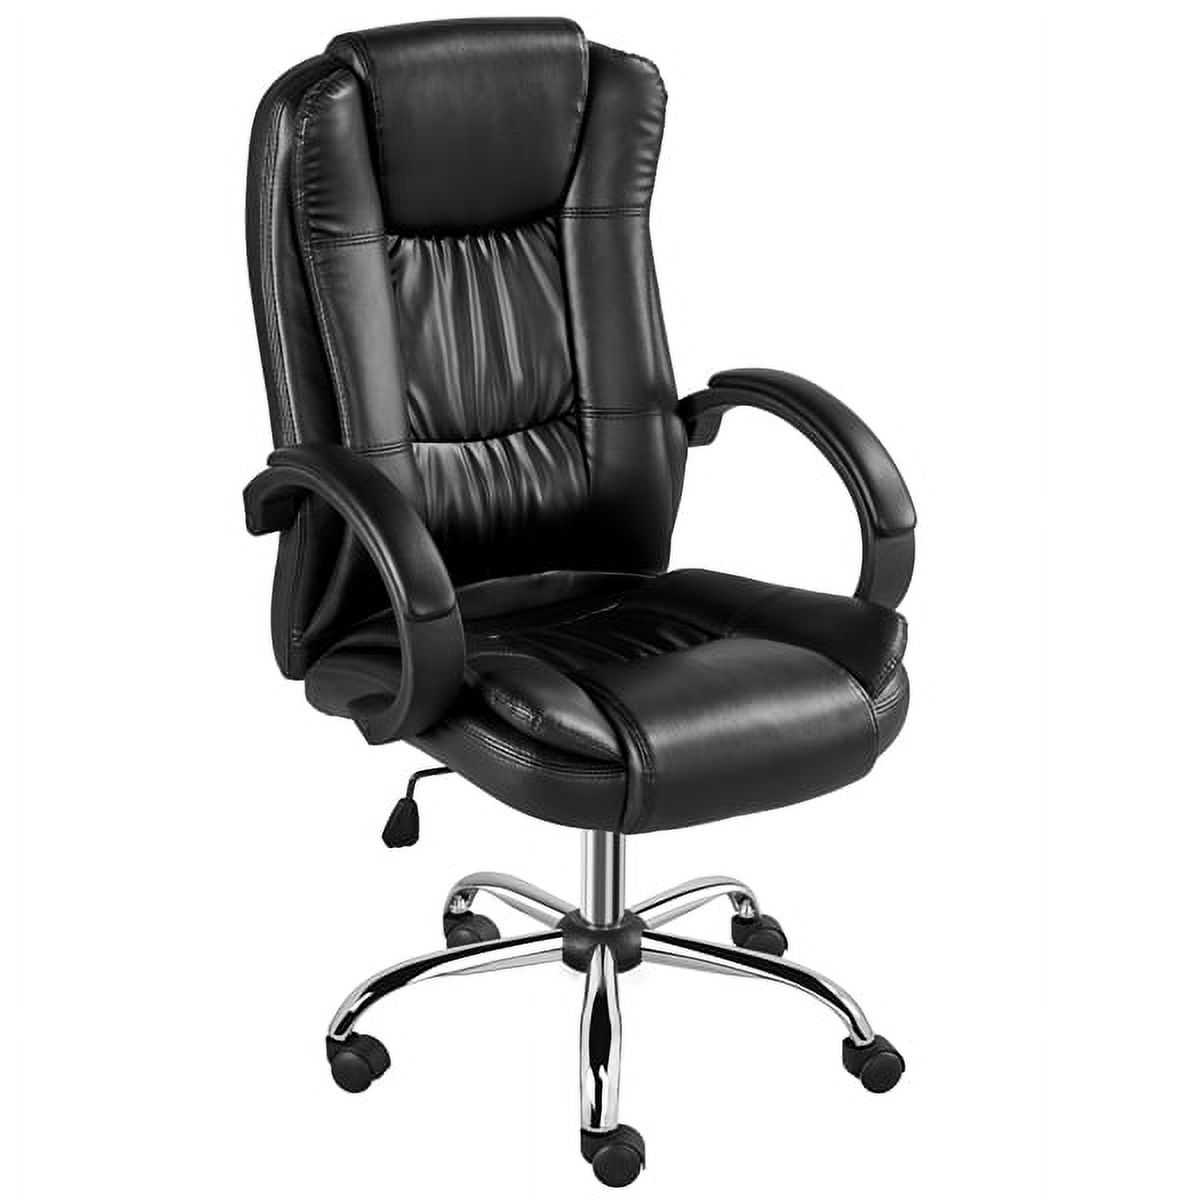 Alden Design Adjustable High Back Ergonomic Faux Leather Swivel Office Chair, Black - image 1 of 13